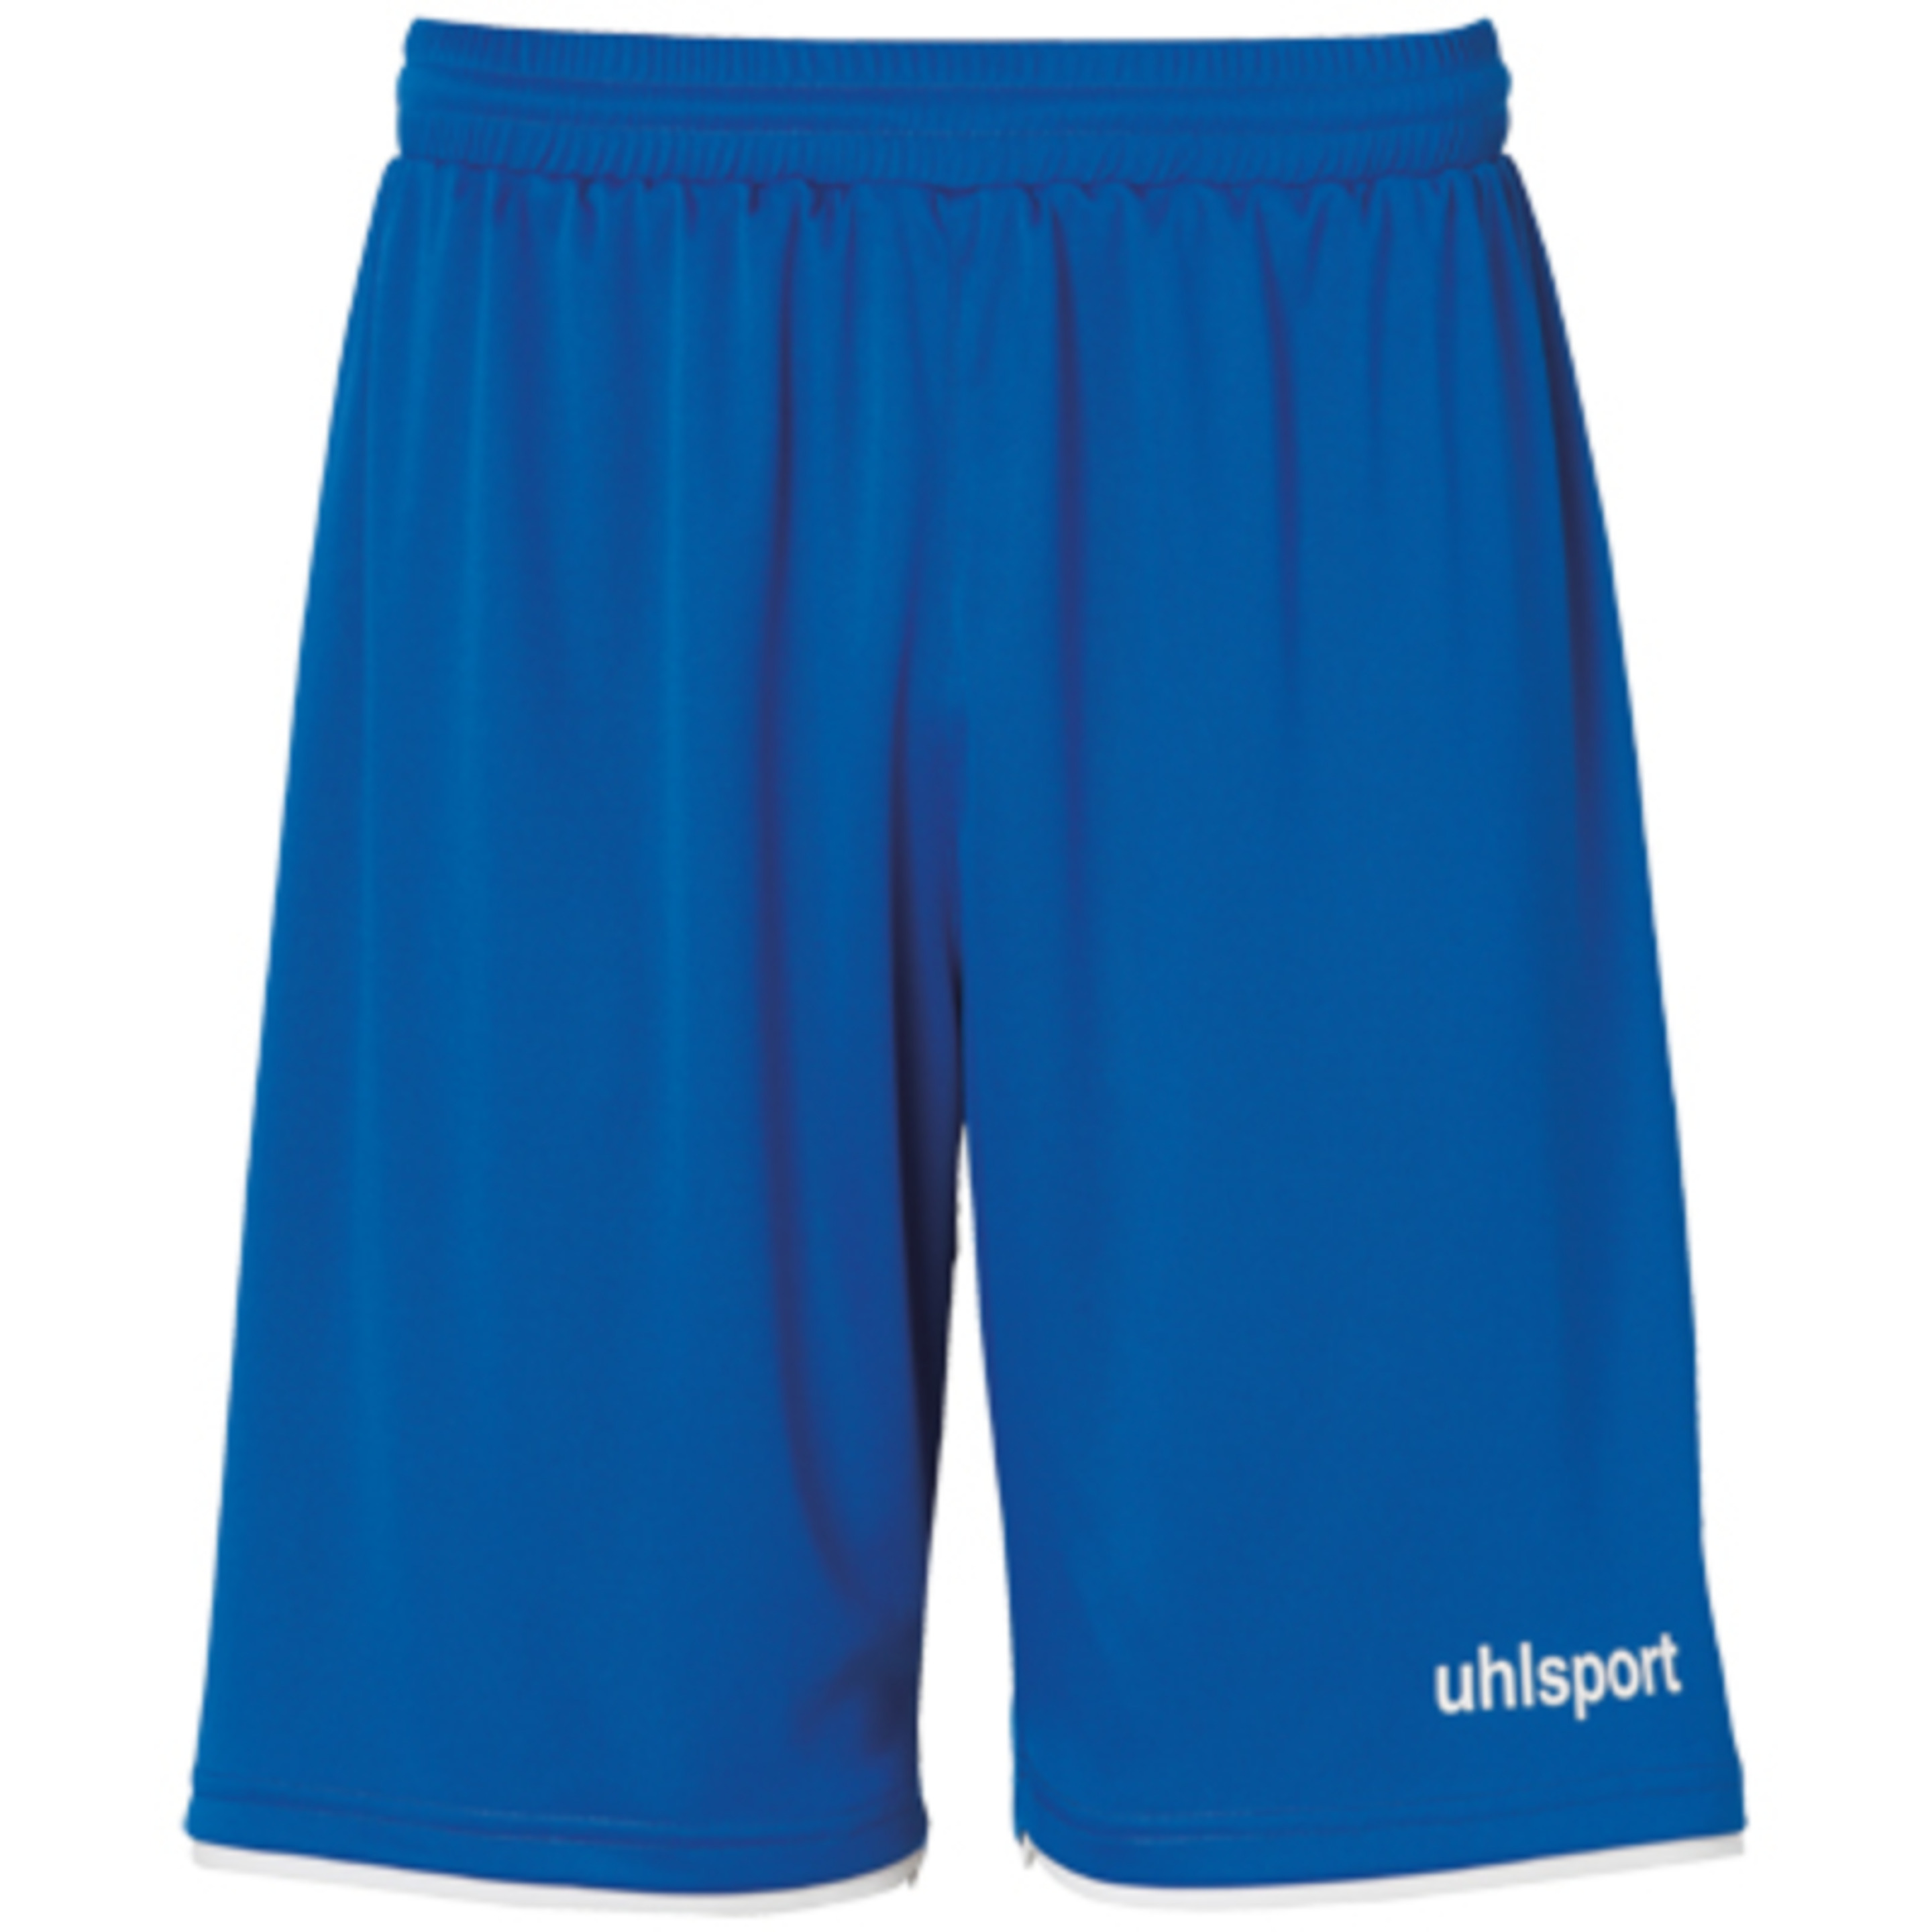 Club Shorts Azur/blanco Uhlsport - blanco-azul - 